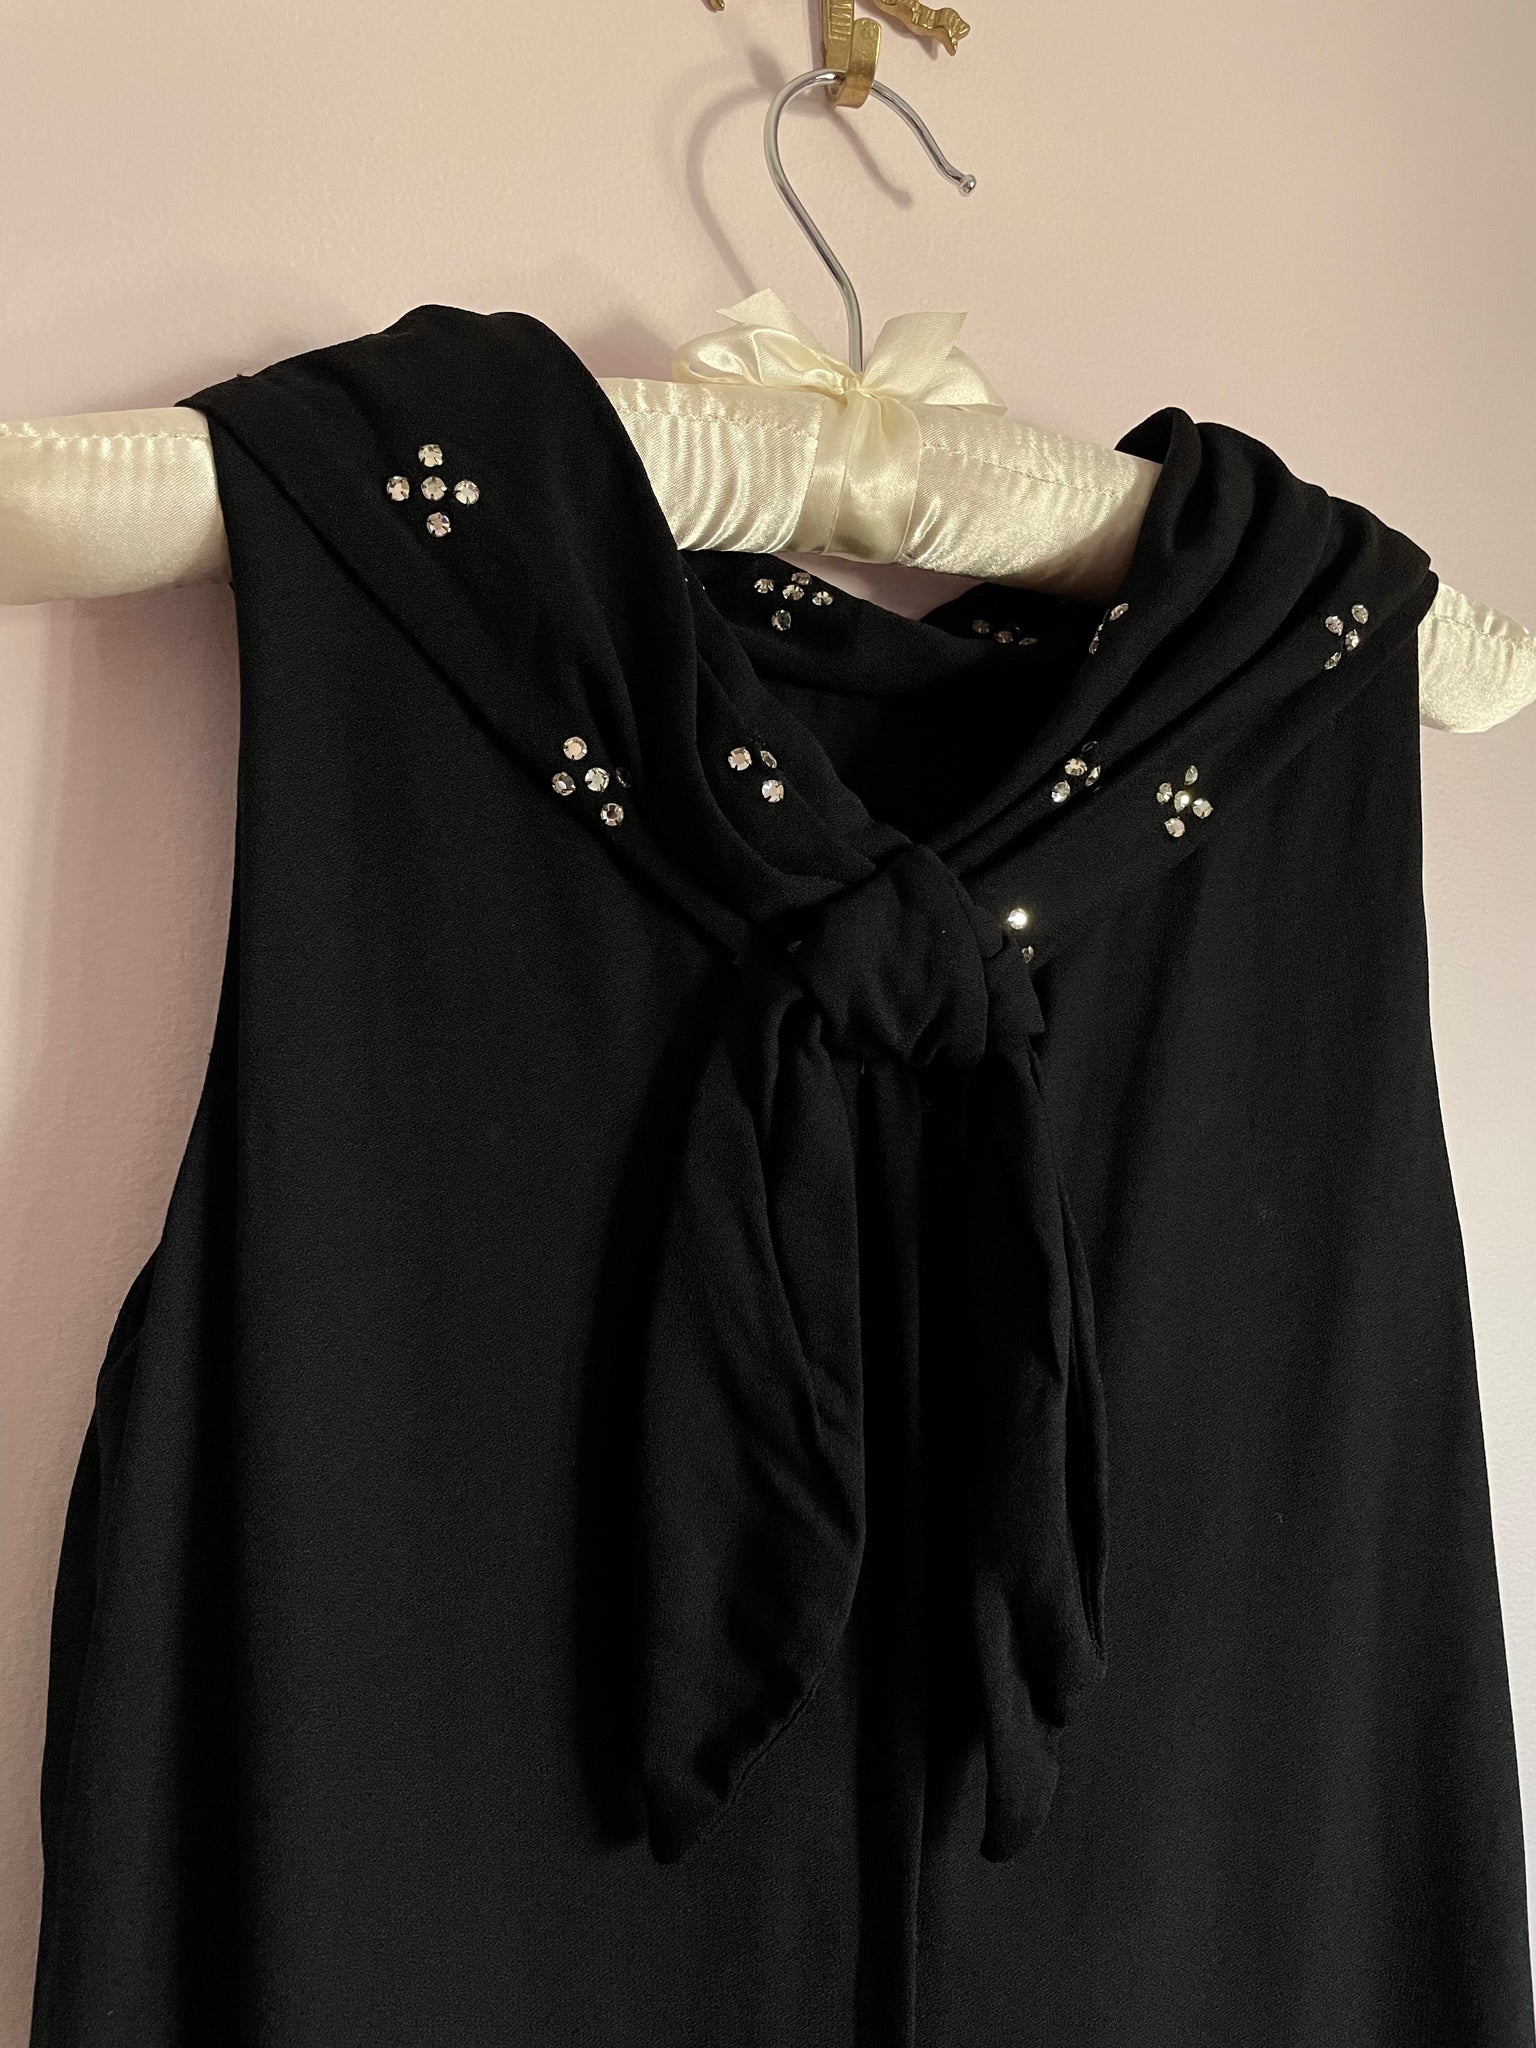 1960s Glass Rhinestone Black Crepe Dress